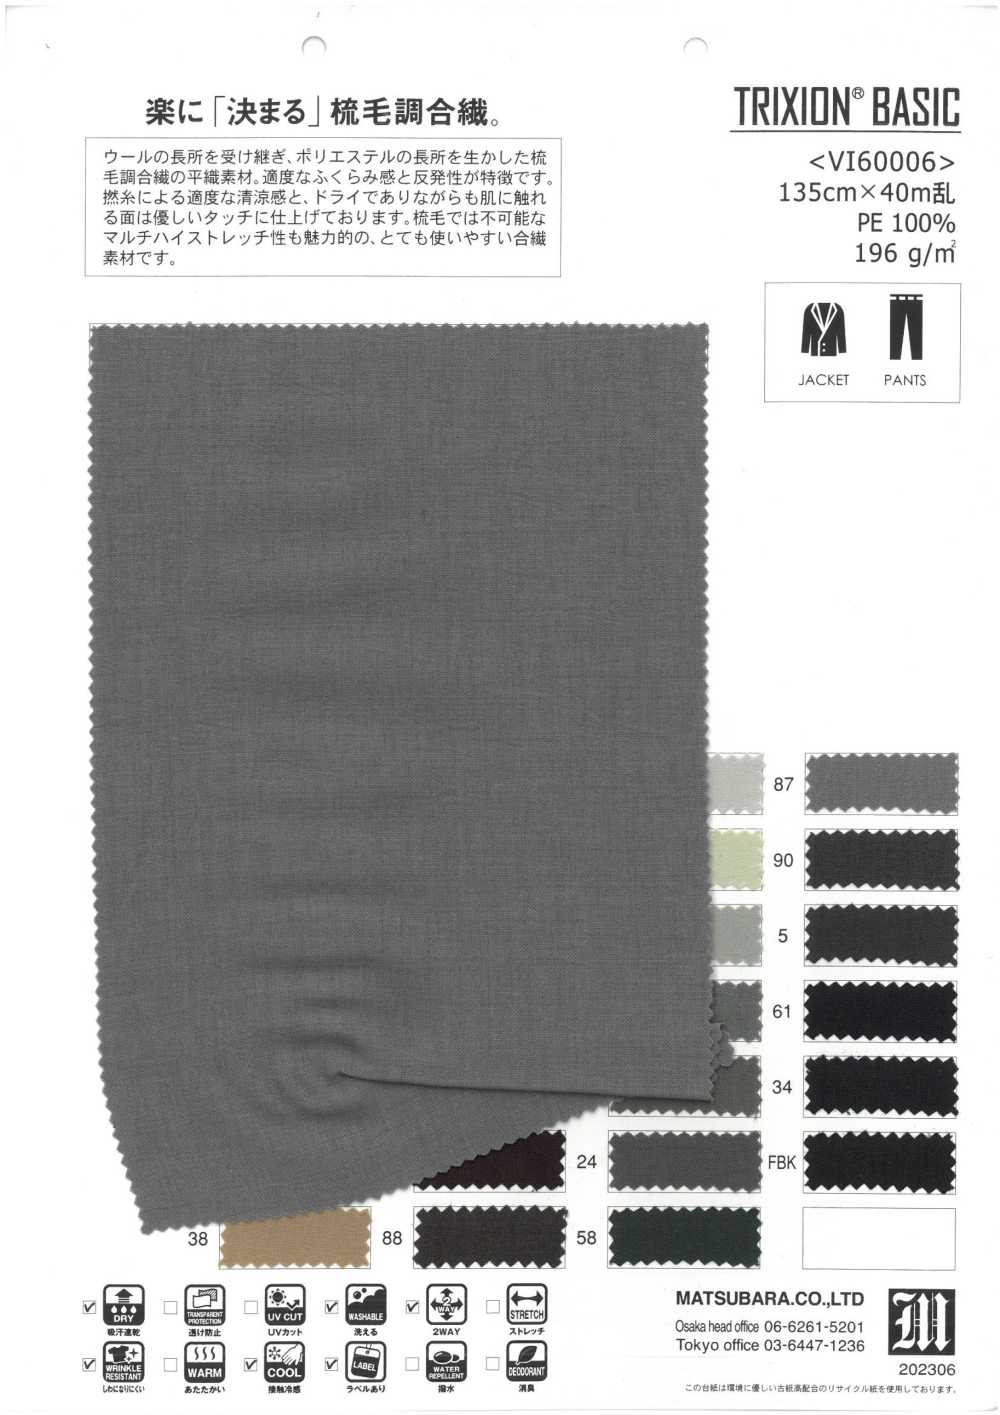 VI60006 TRIXION® BASIC[Textilgewebe] Matsubara